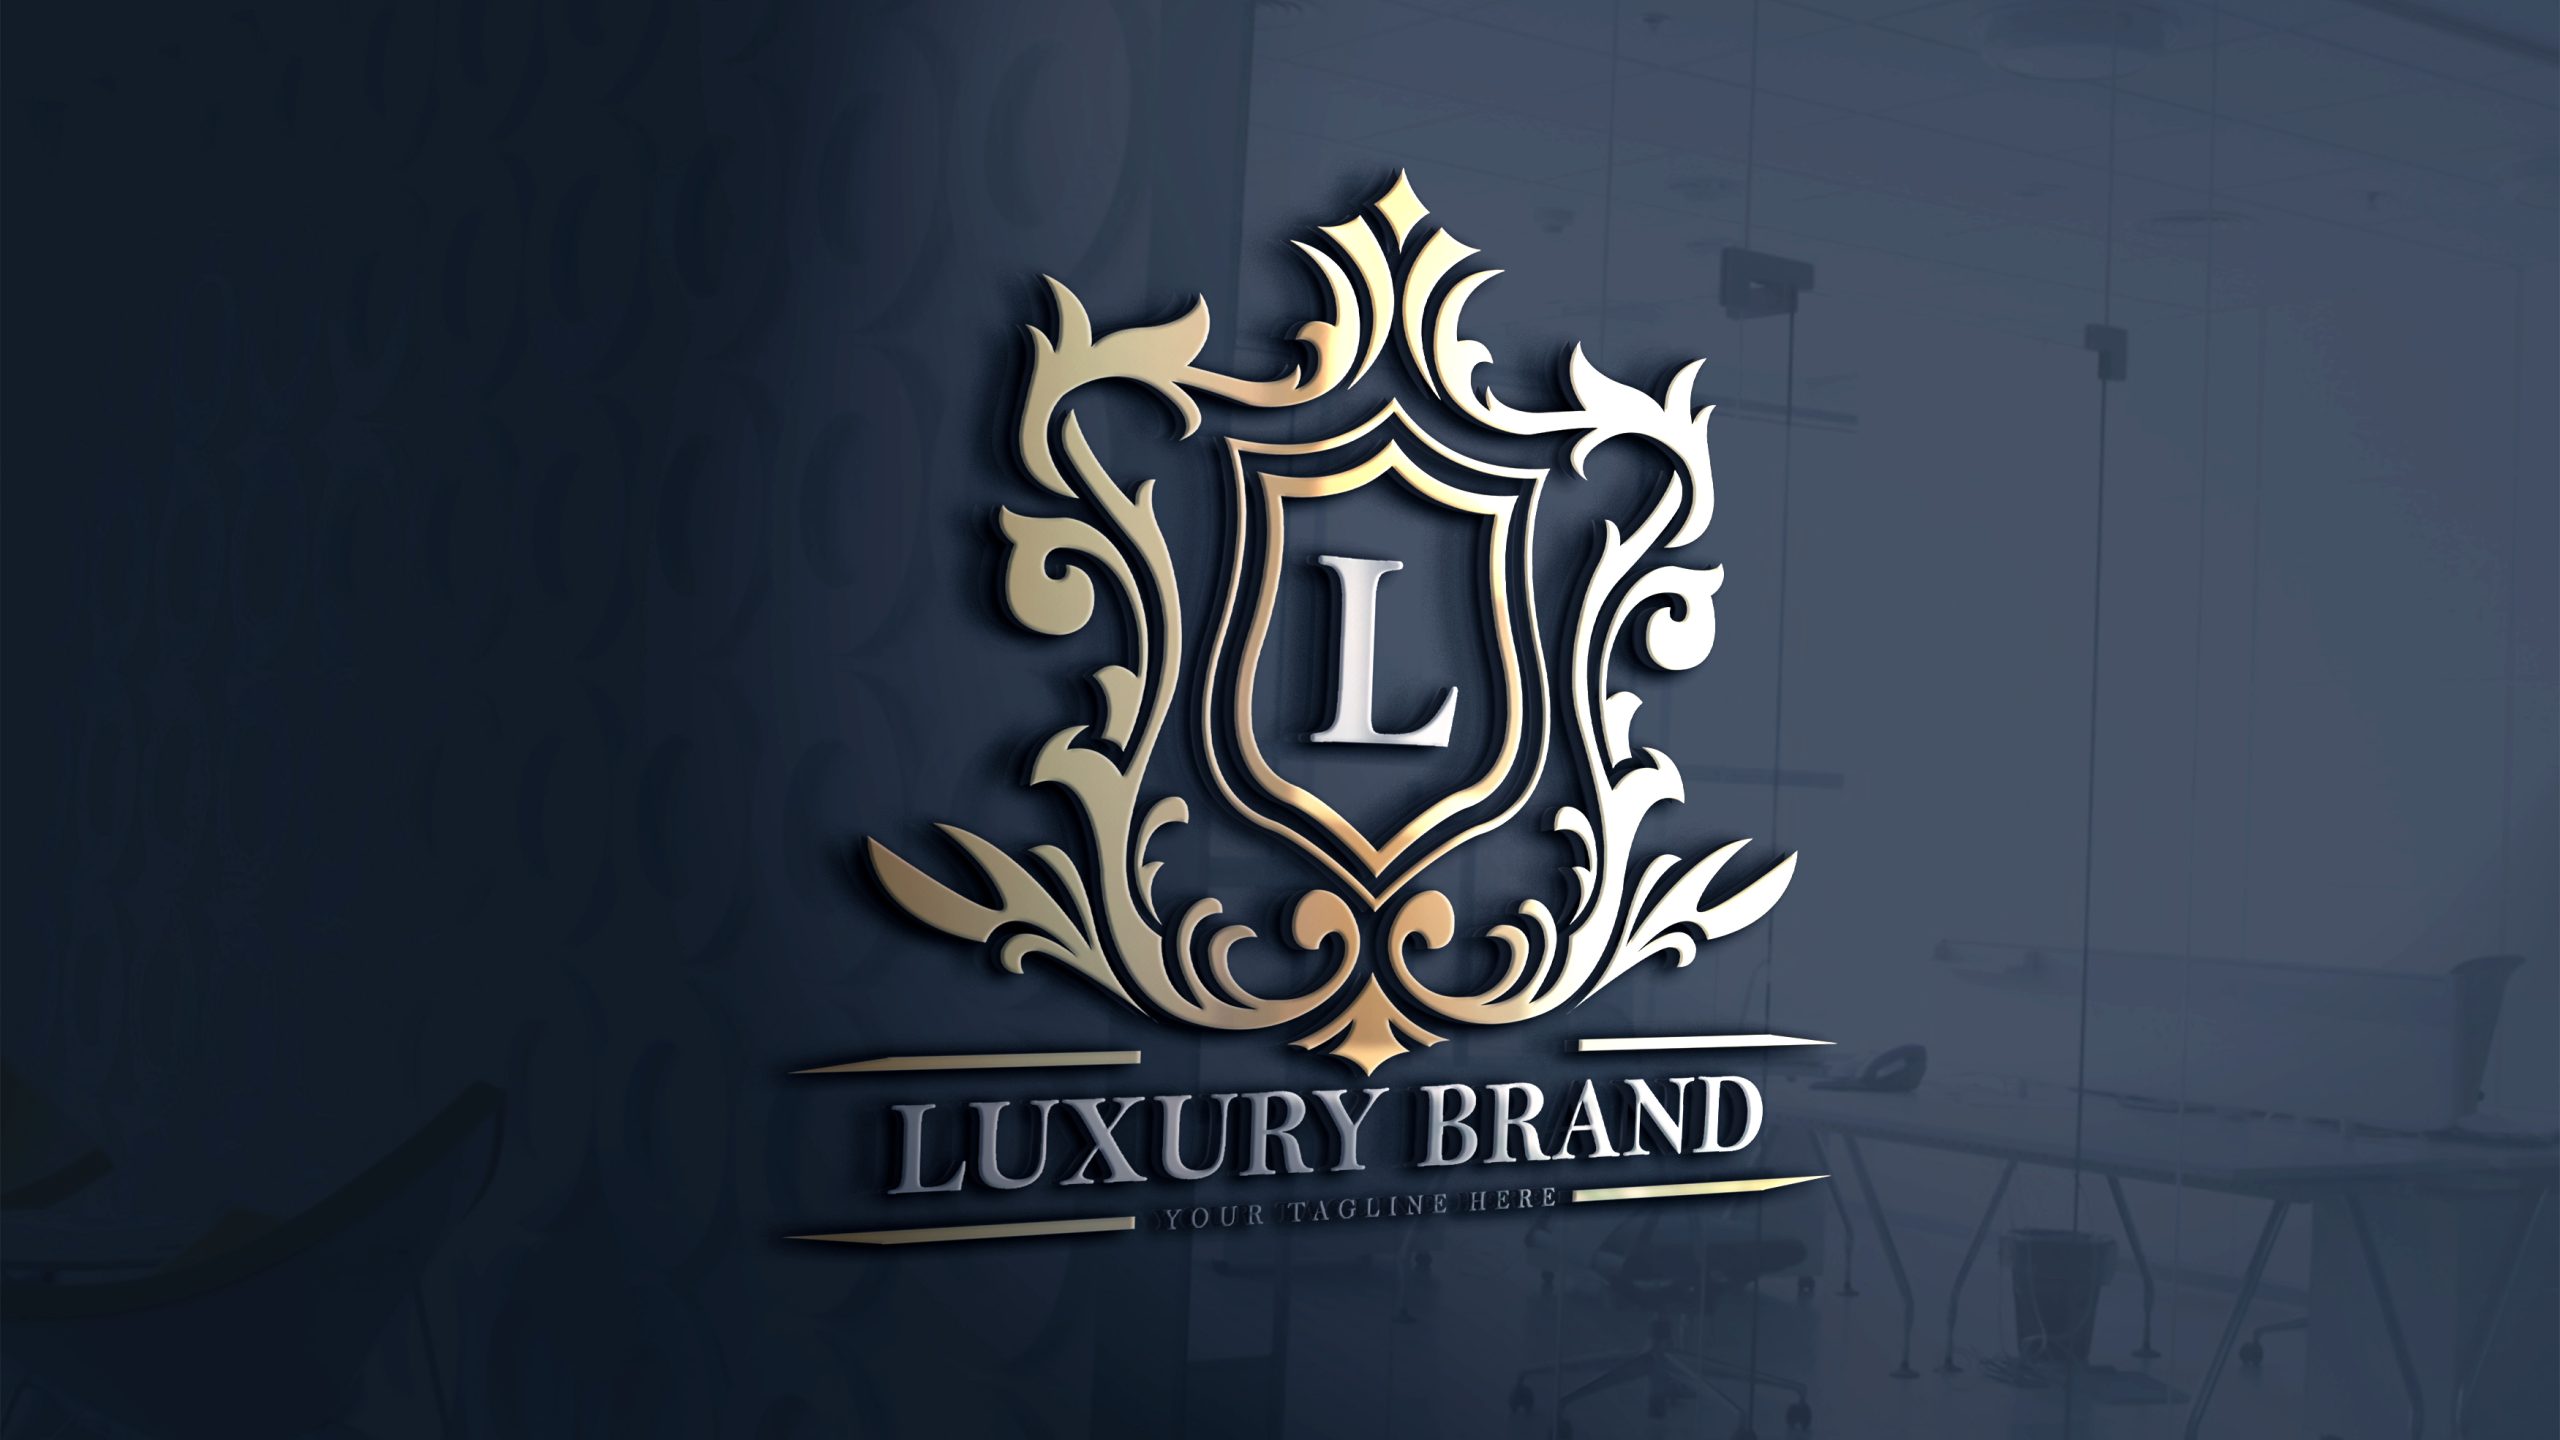 Luxury Royal Logo Design Template by GFXCity on Dribbble